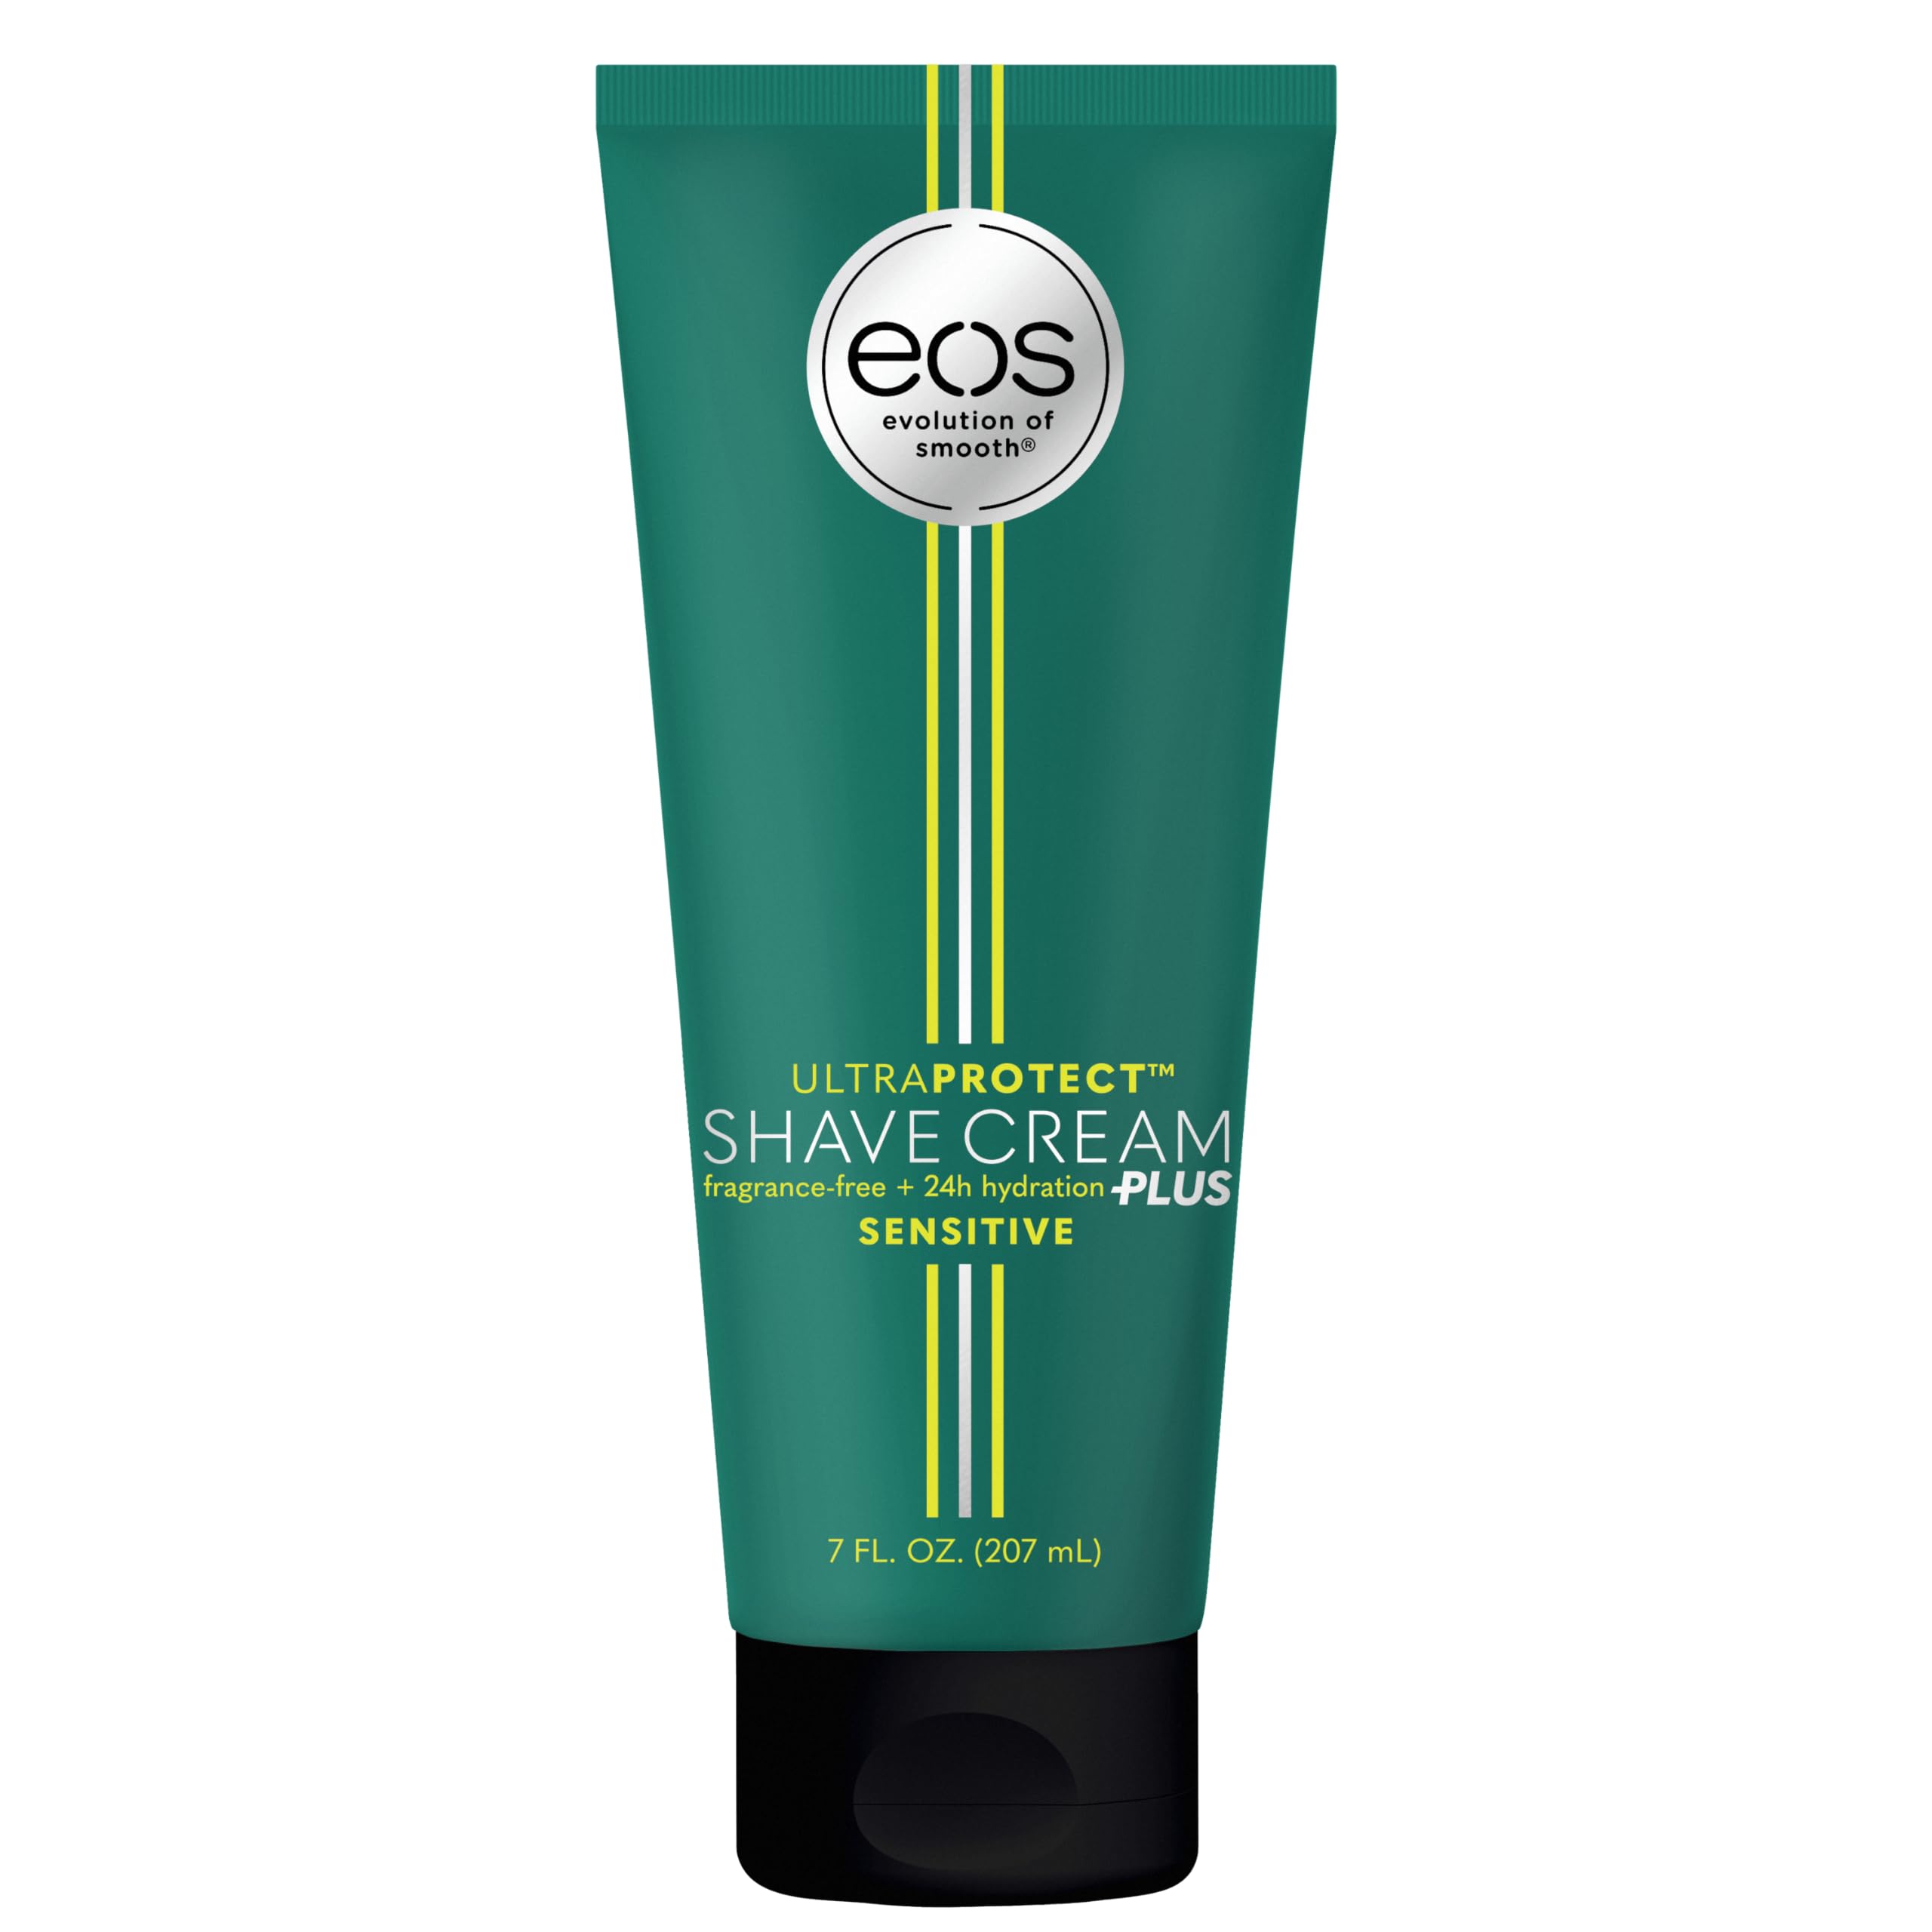 eos UltraProtect Men’s Shave Cream- Sensitive, 24-Hour Hydration, Unscented, Non-Foaming Formula, 7 fl oz